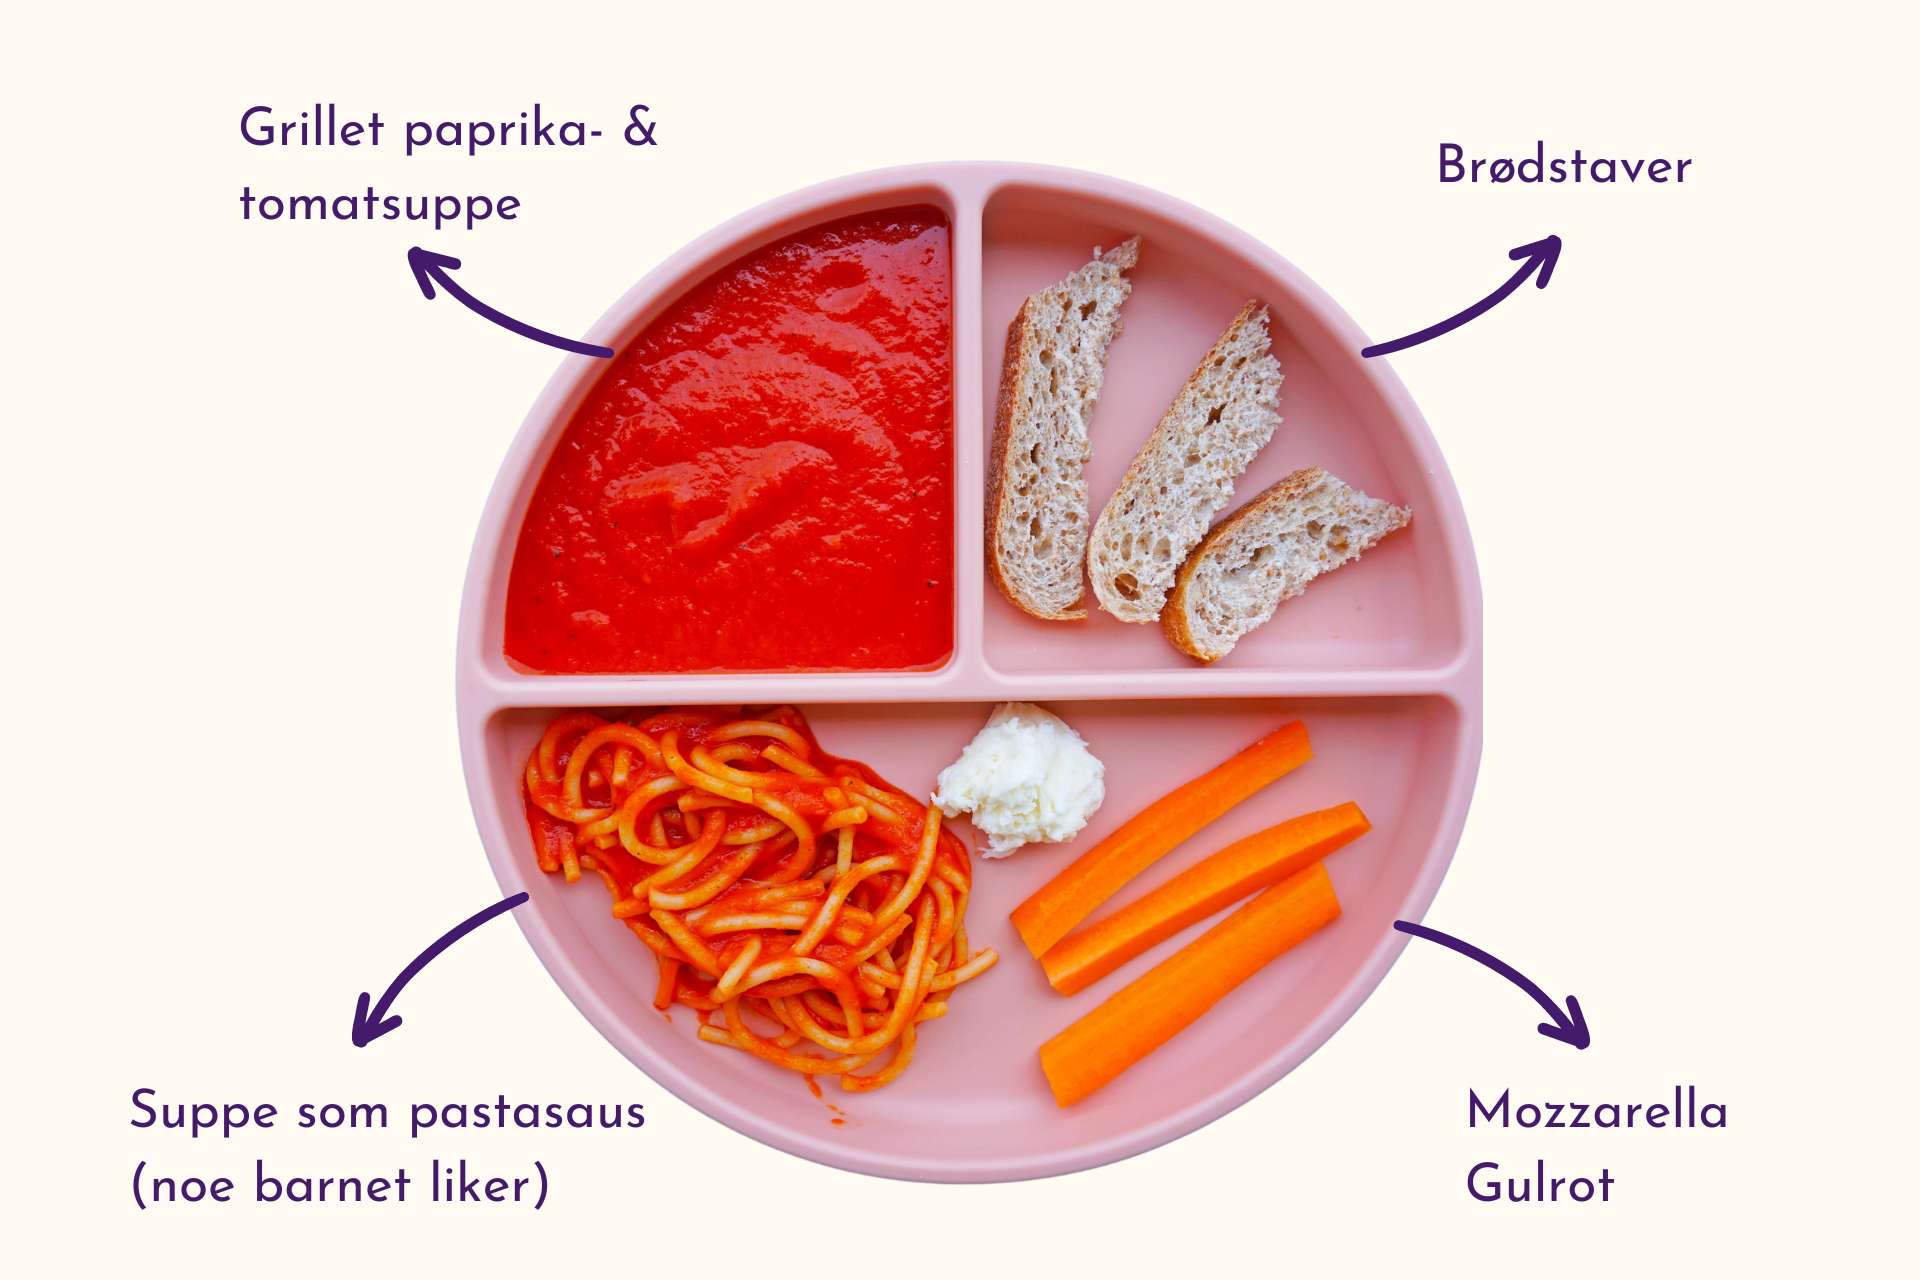 Barnevennlig Grillet paprika- & tomatsuppe med mozzarella